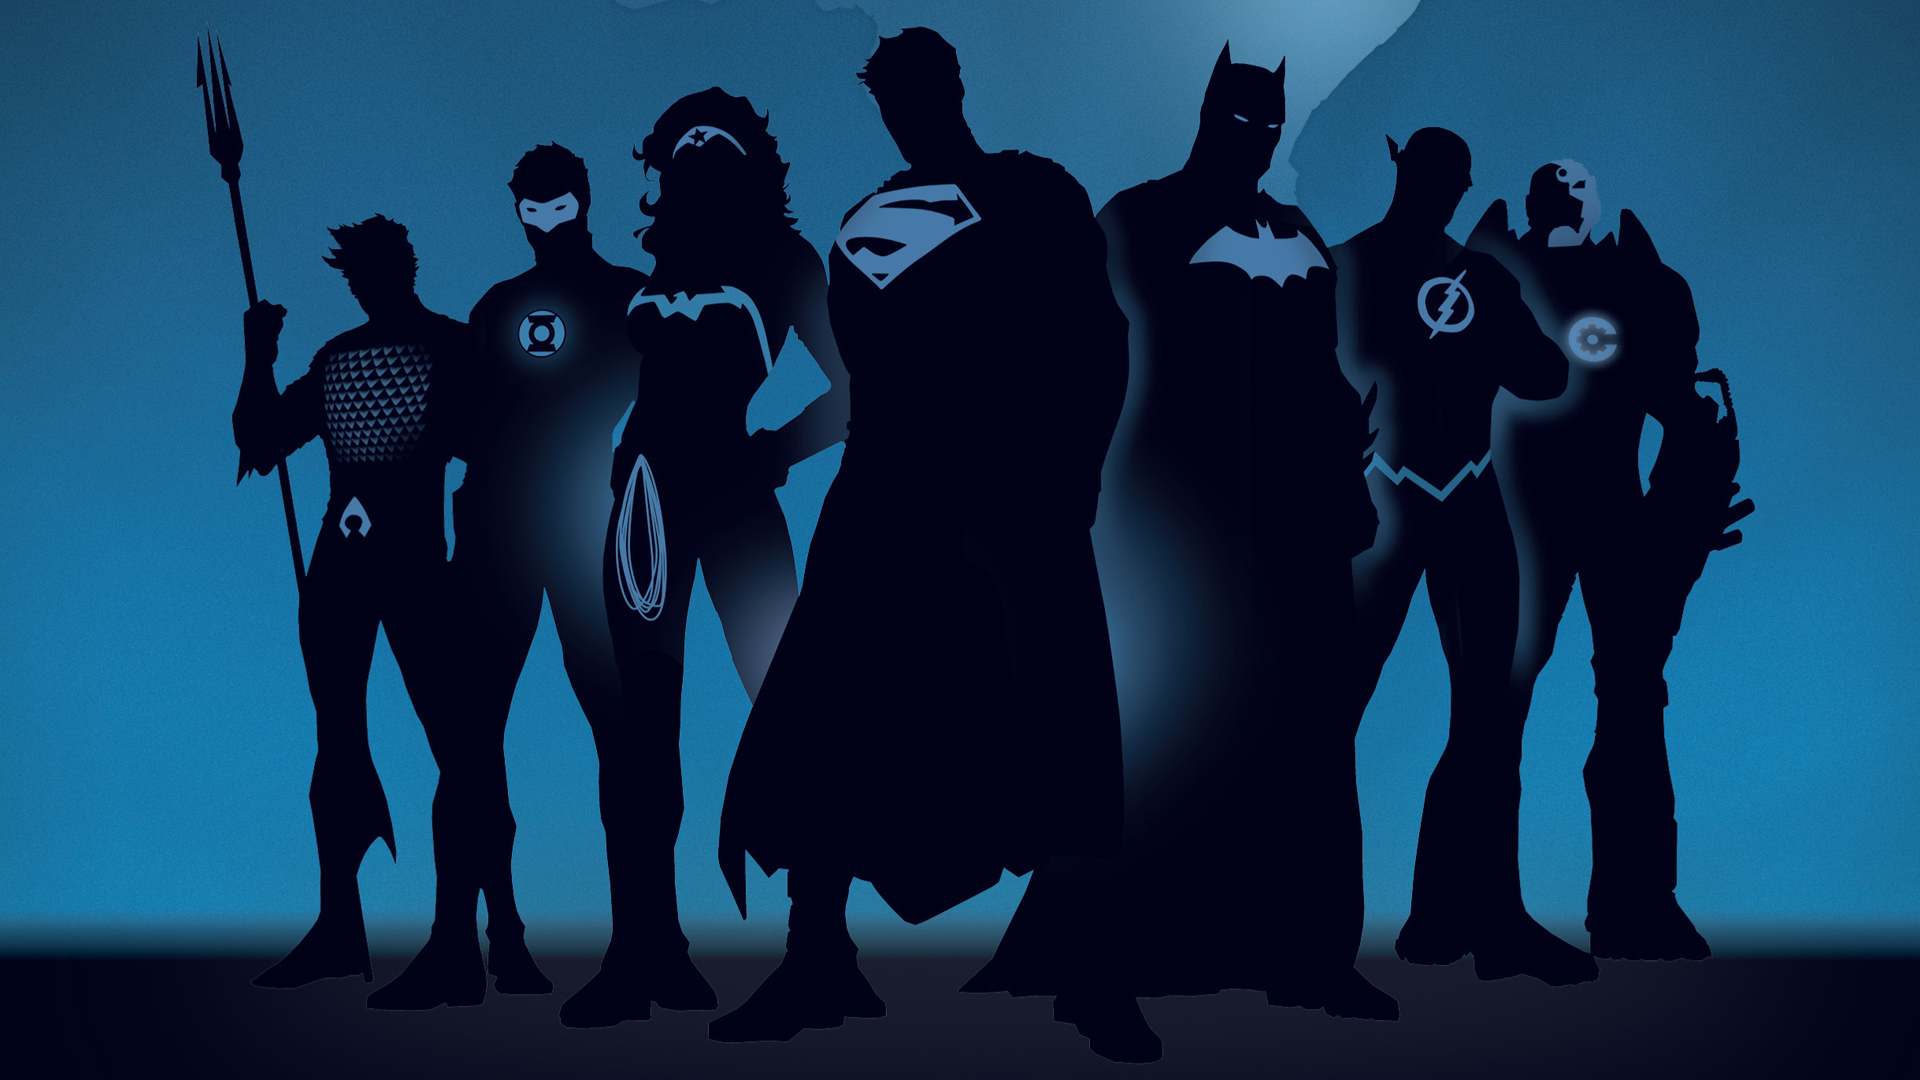 bruce wayne, batman, diana prince, superman, justice league, comics, aquaman, wonder woman, cyborg (dc comics), the dark knight, barry allen, flash, green lantern, dc comics